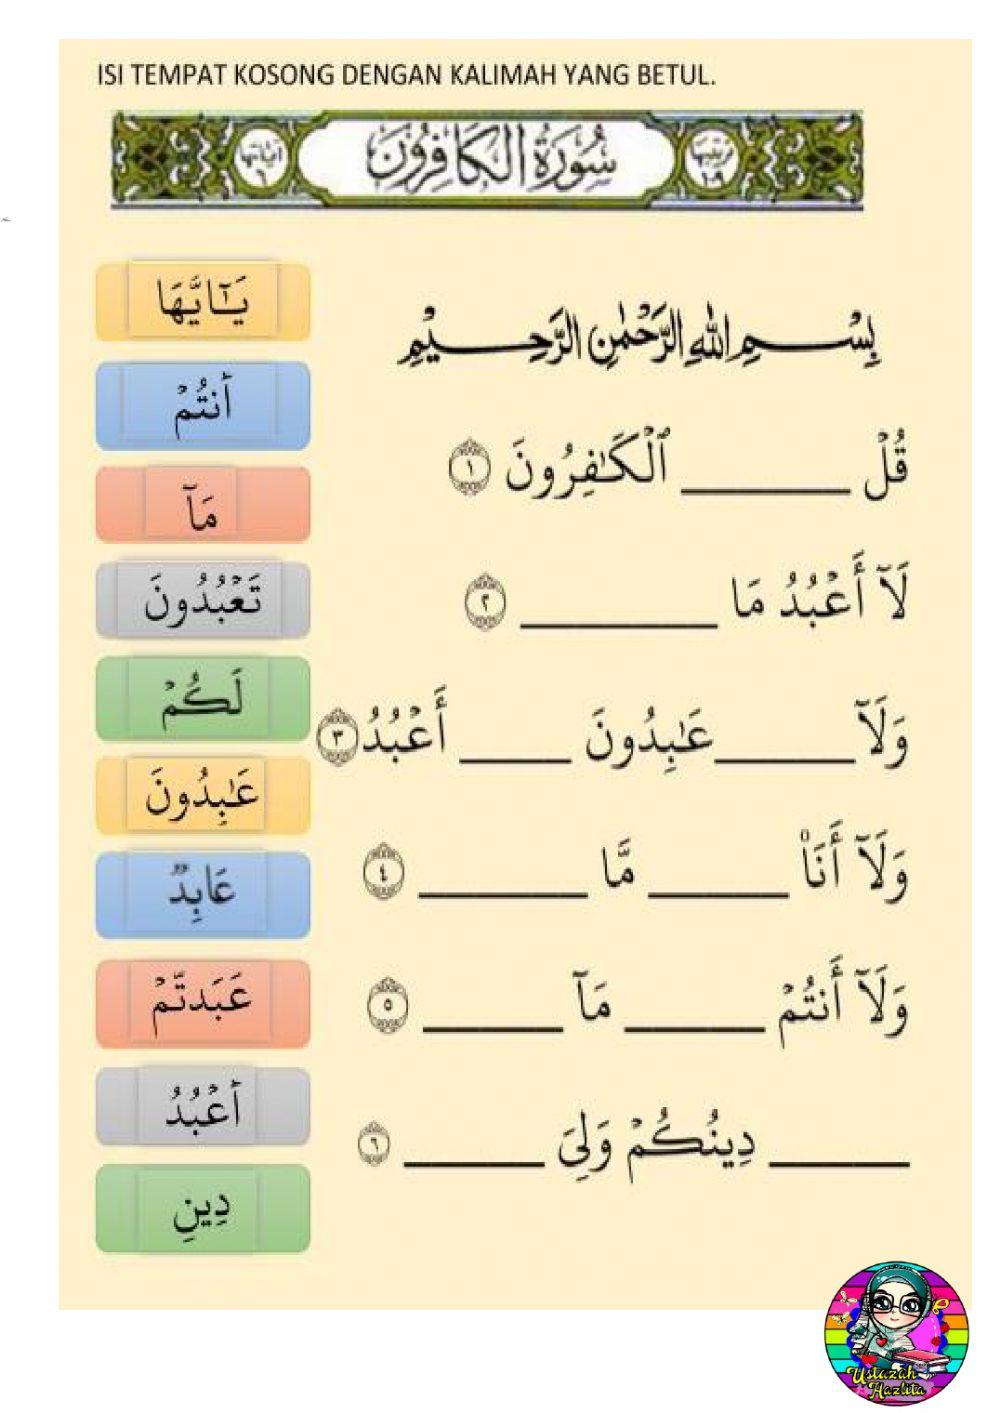 Latihan al-quran surah hud ayat 54-71